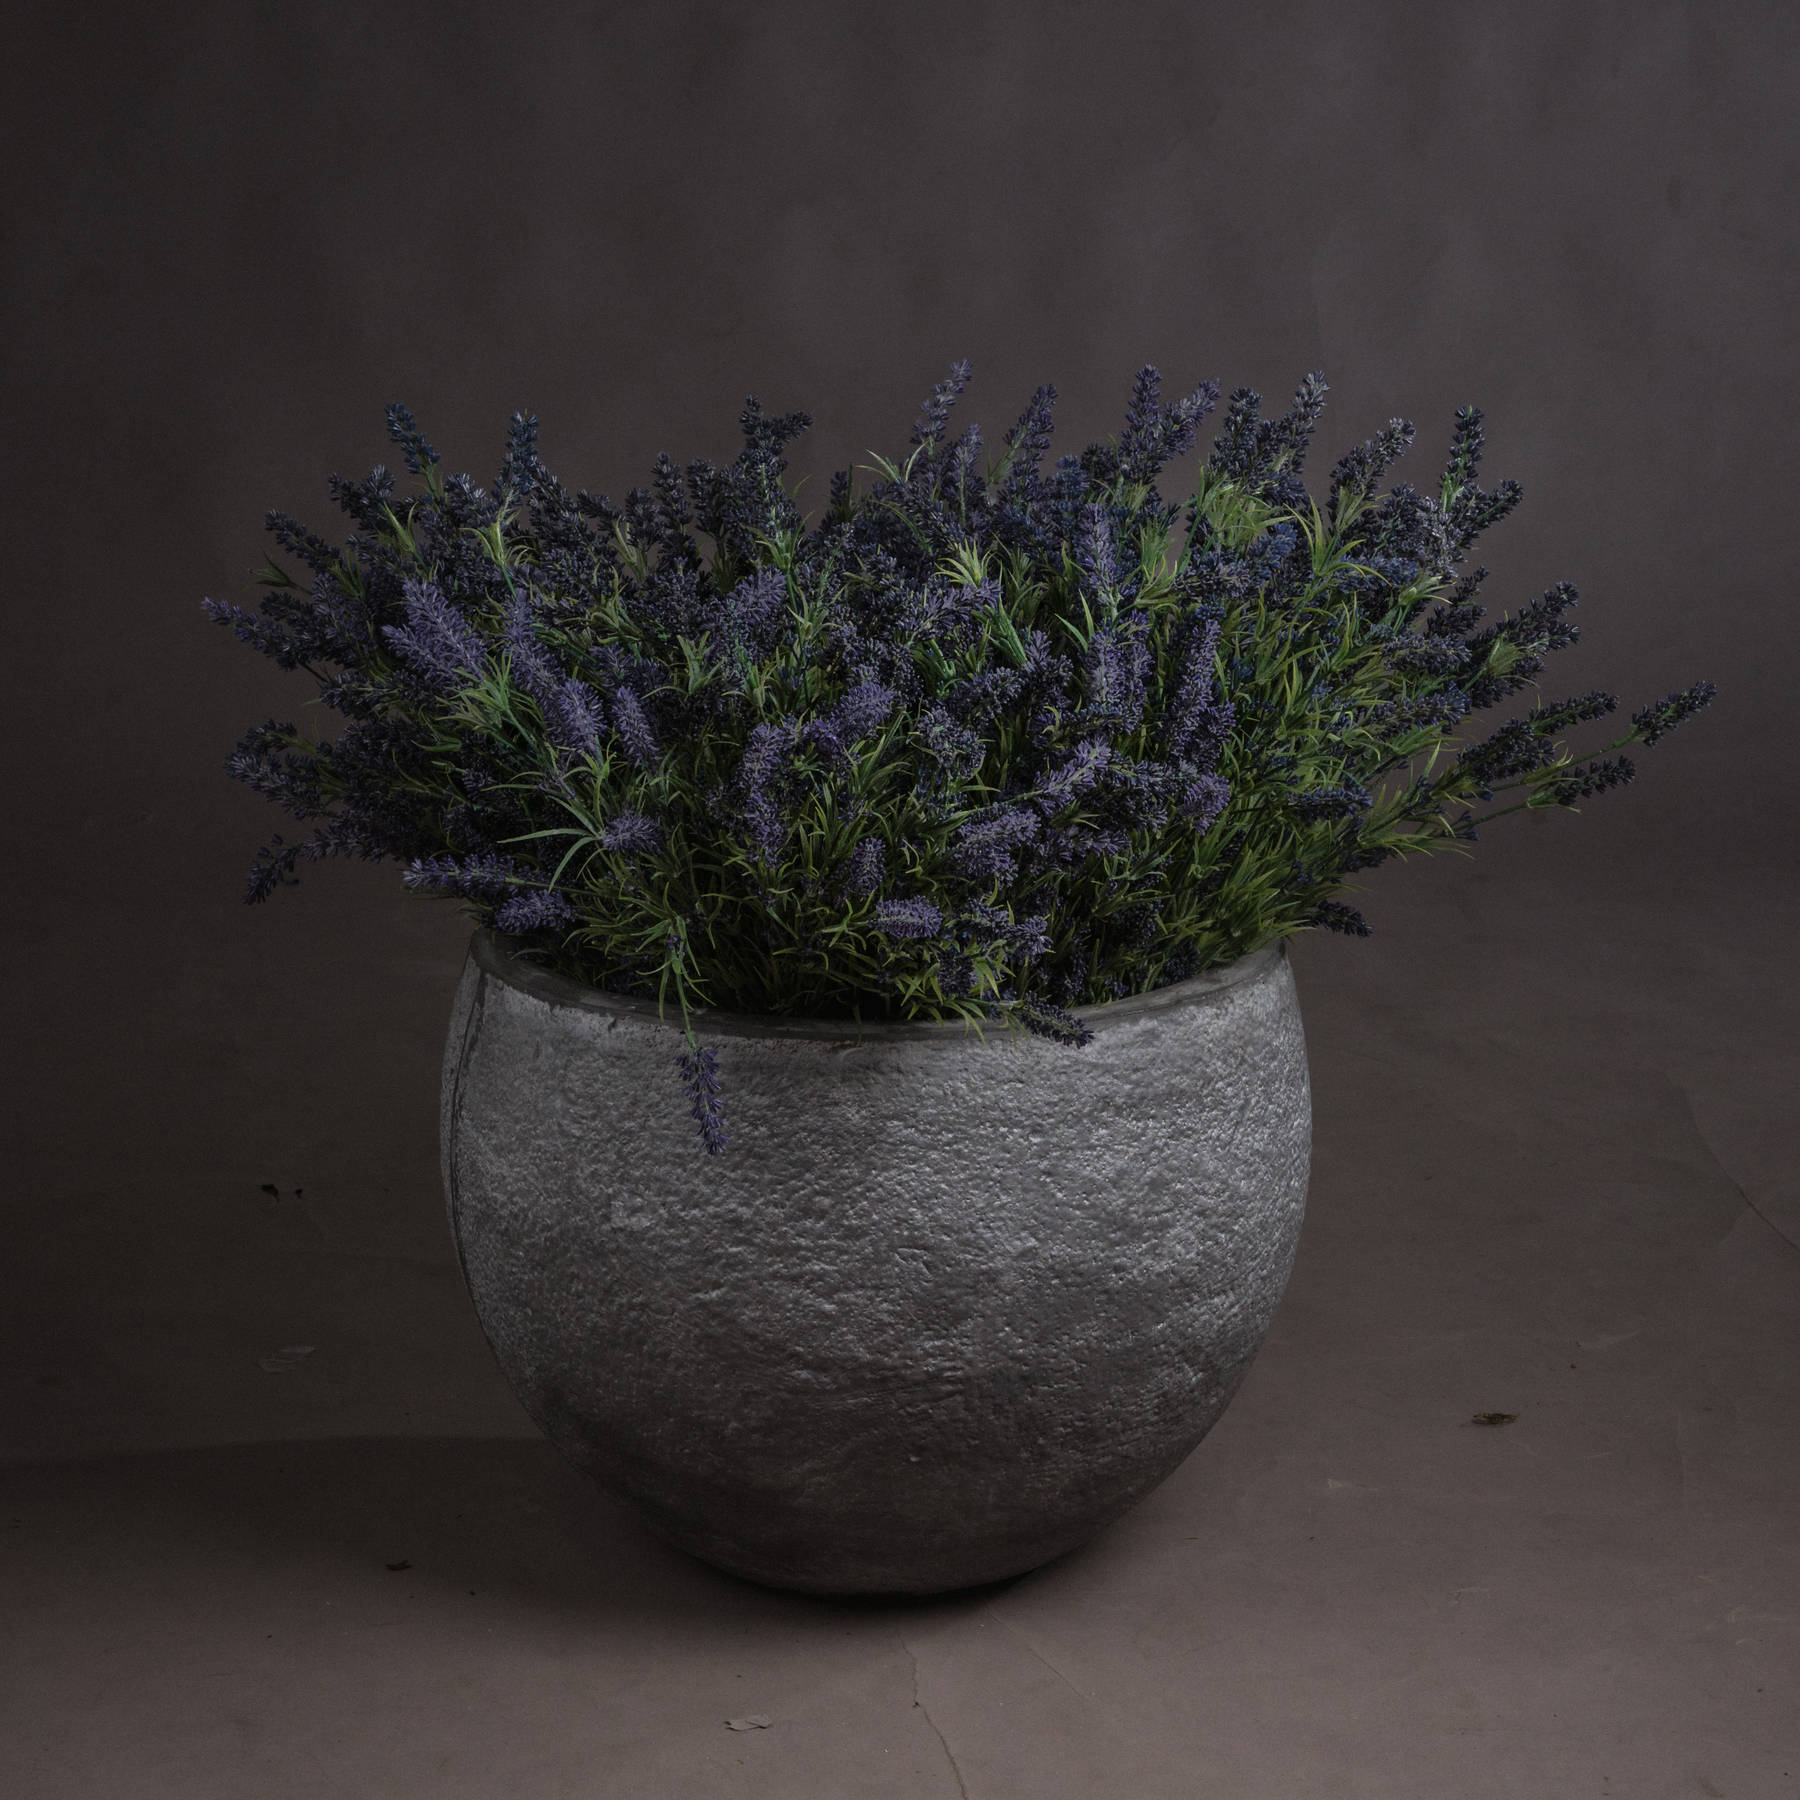 Large Lavender Bush - Image 1